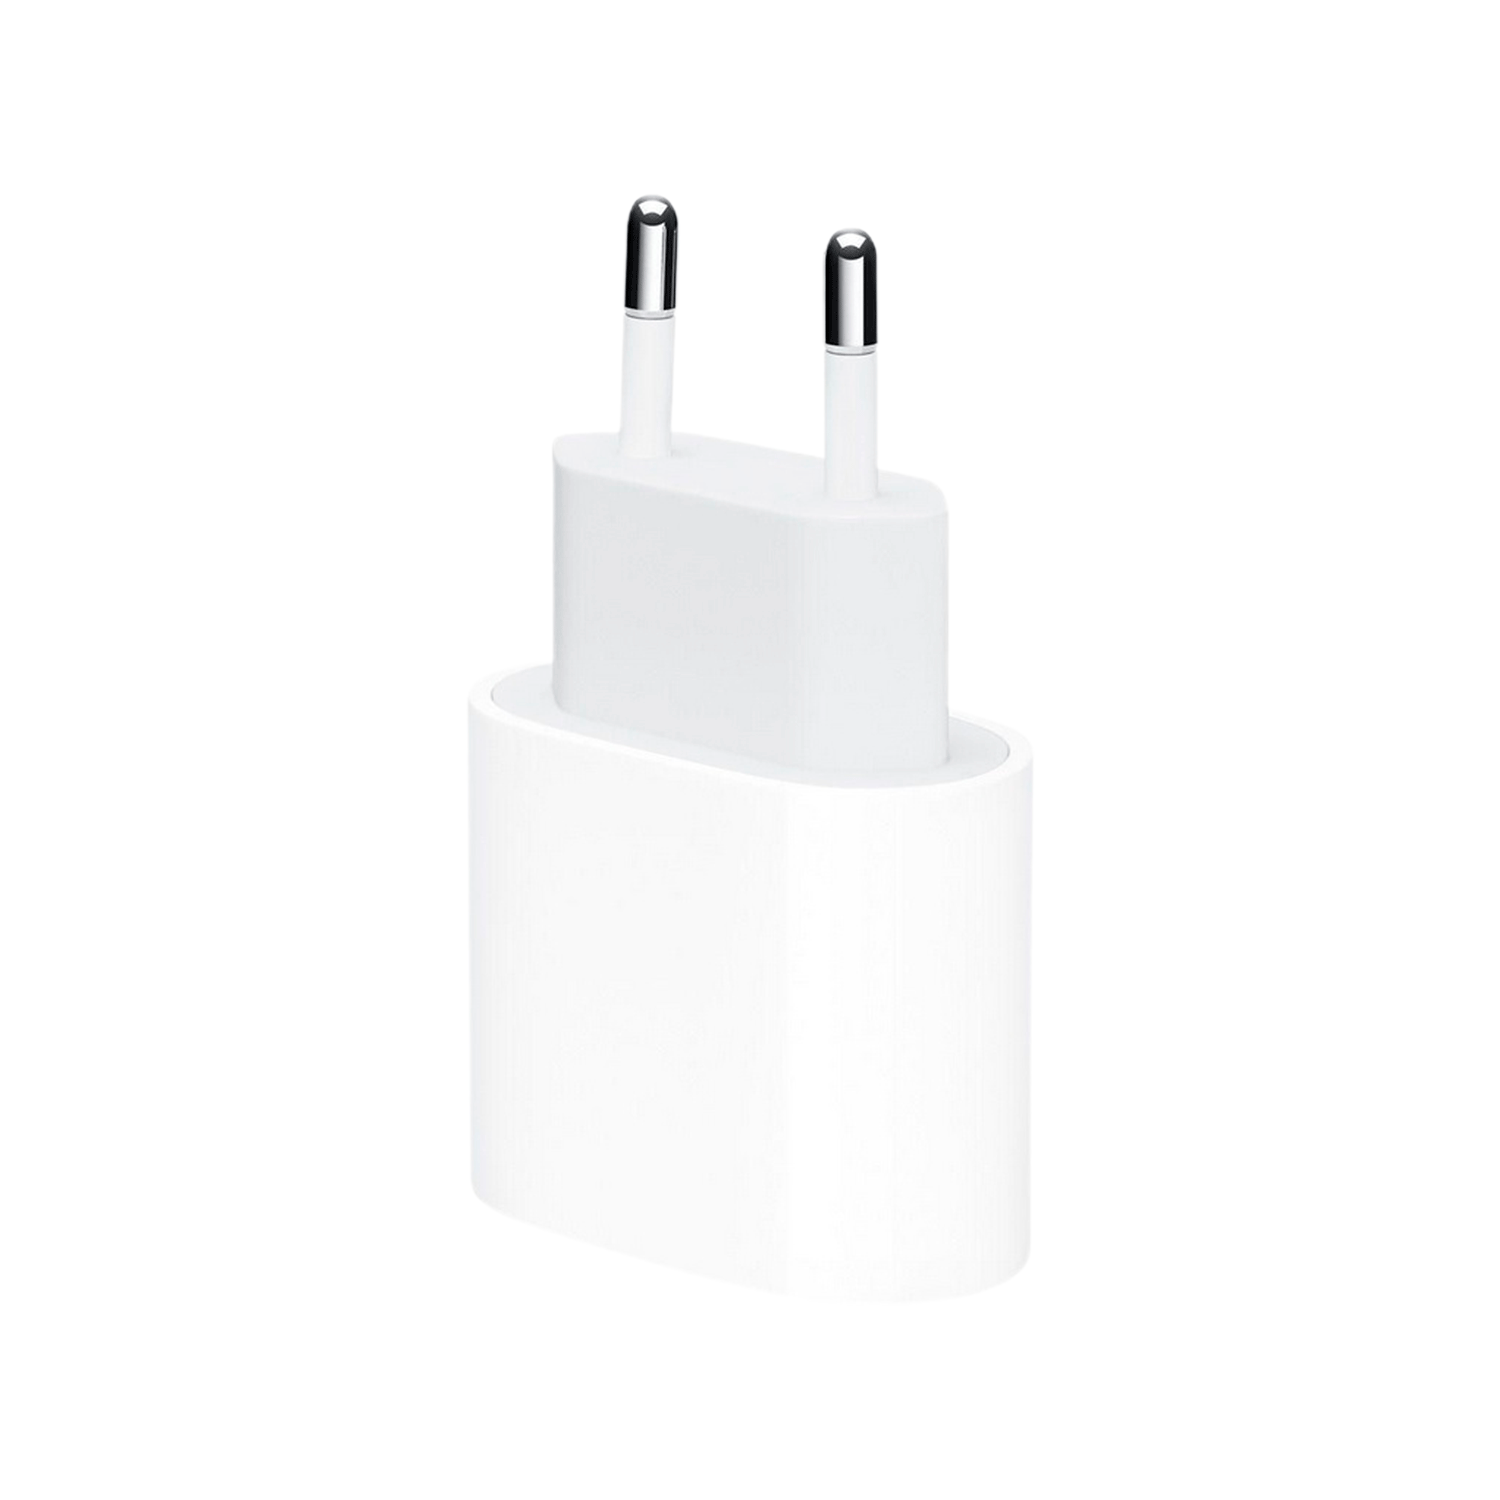 Adaptador USB-C para iPhone 12 e 13 - Branco (MU7U2LL/A) (Paralelo)